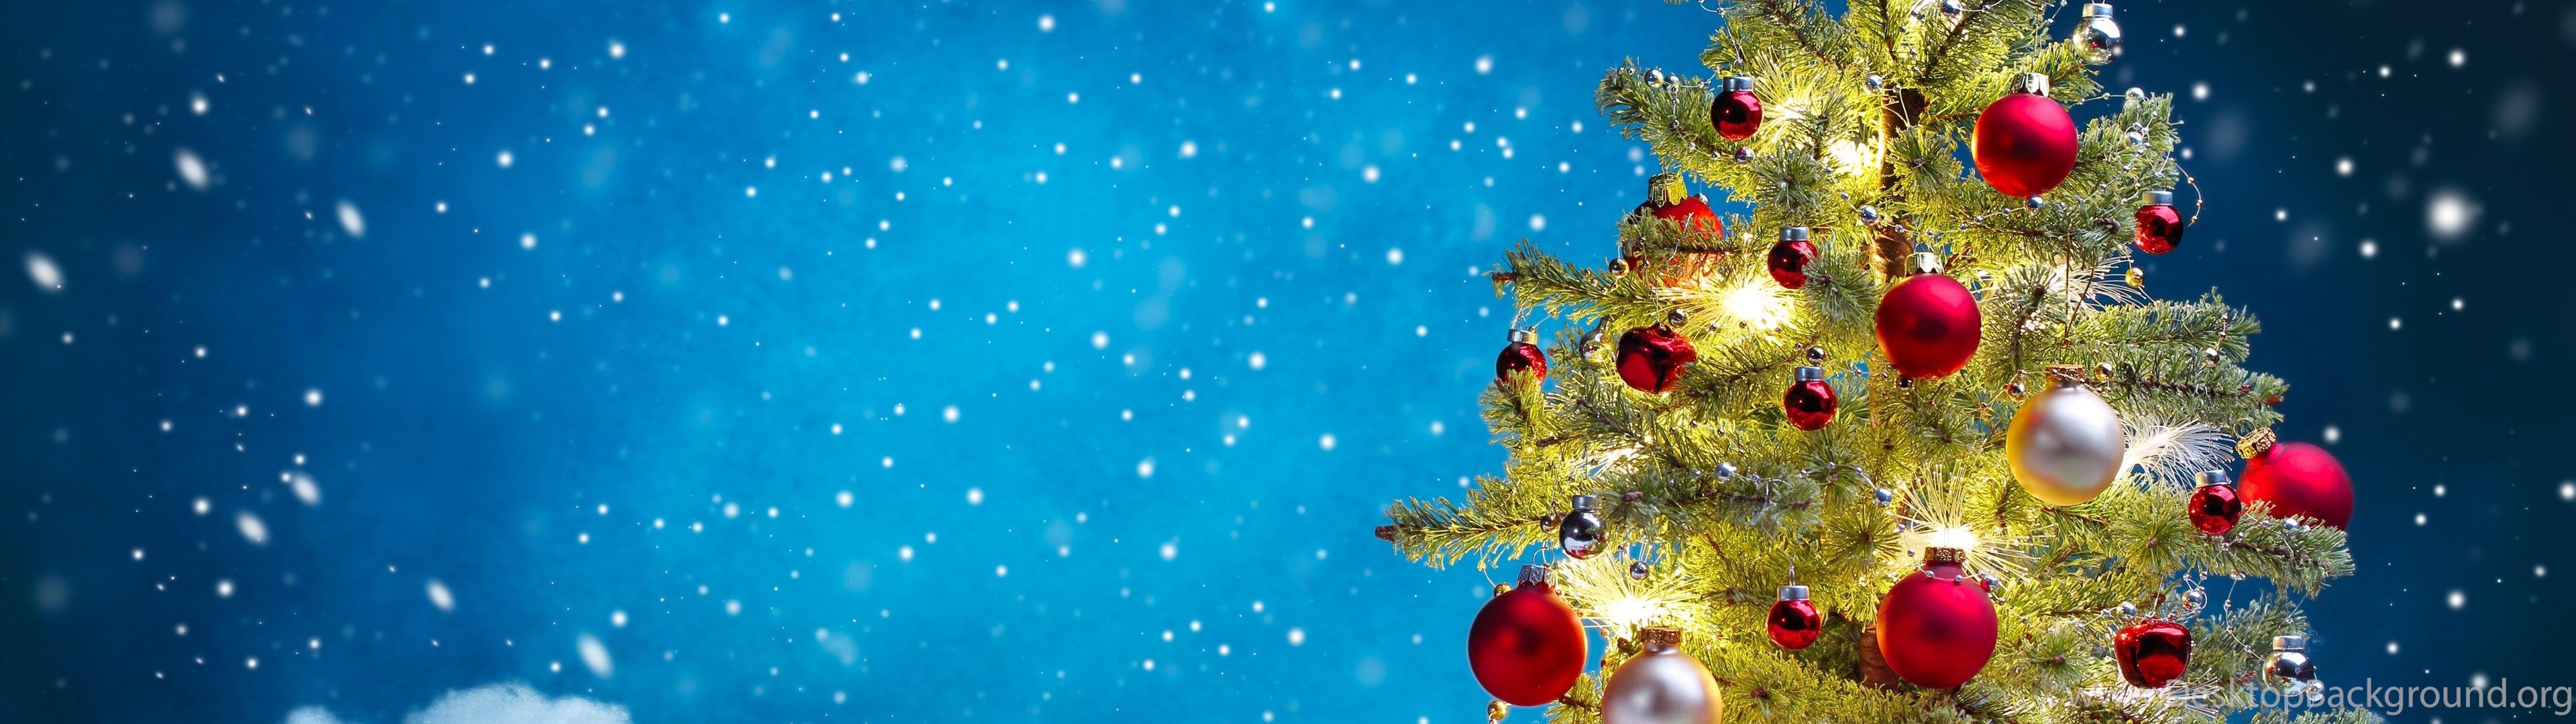 Holidays Christmas Gifts Christmas Tree Snow >> HD Wallpaper, Get. Desktop Background